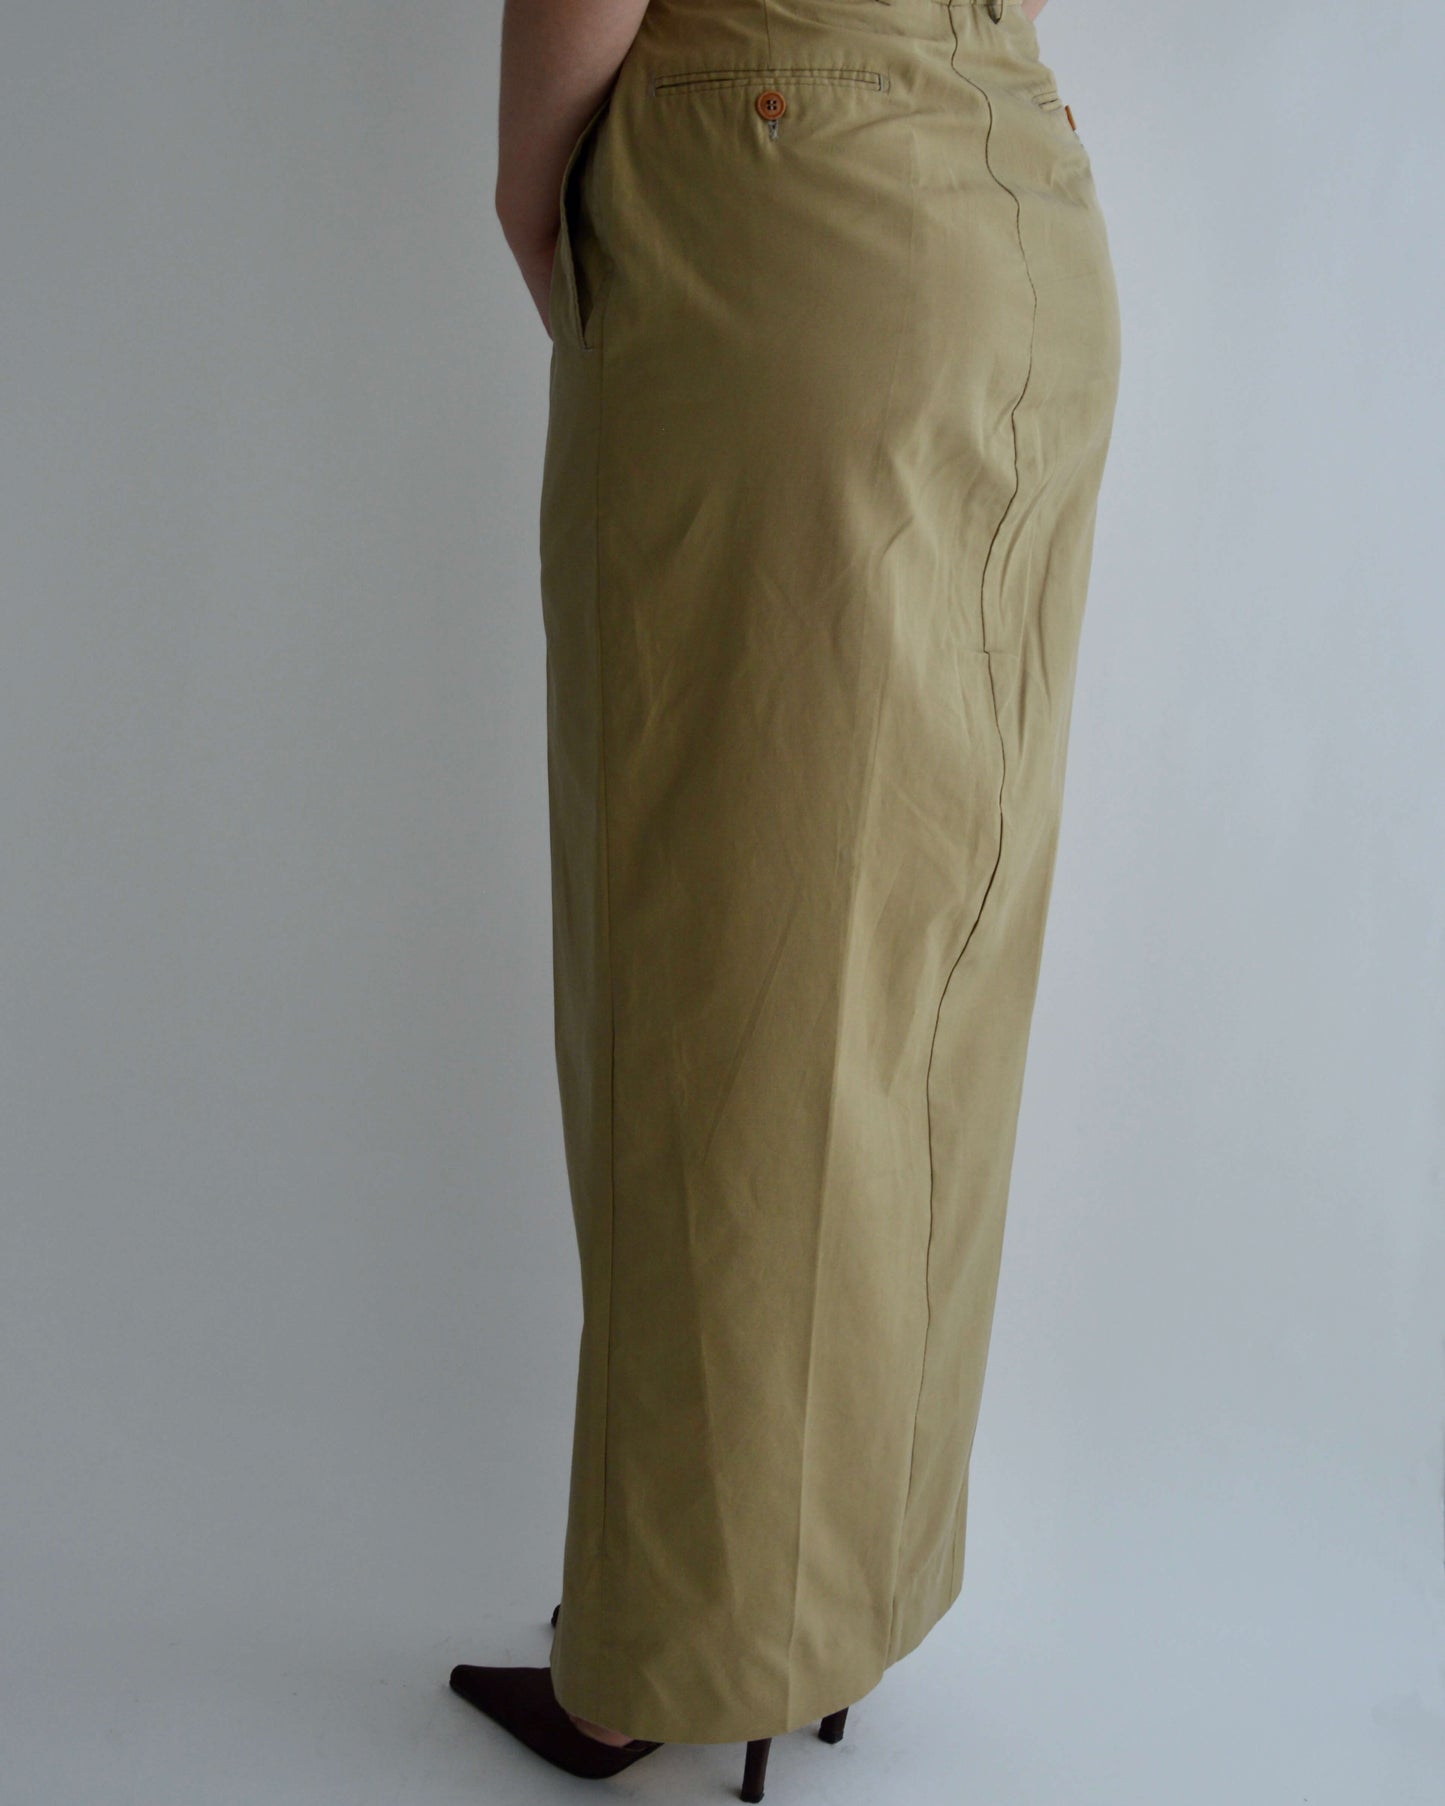 Vegan Skirt Suit - Autum Parfait (S/M)